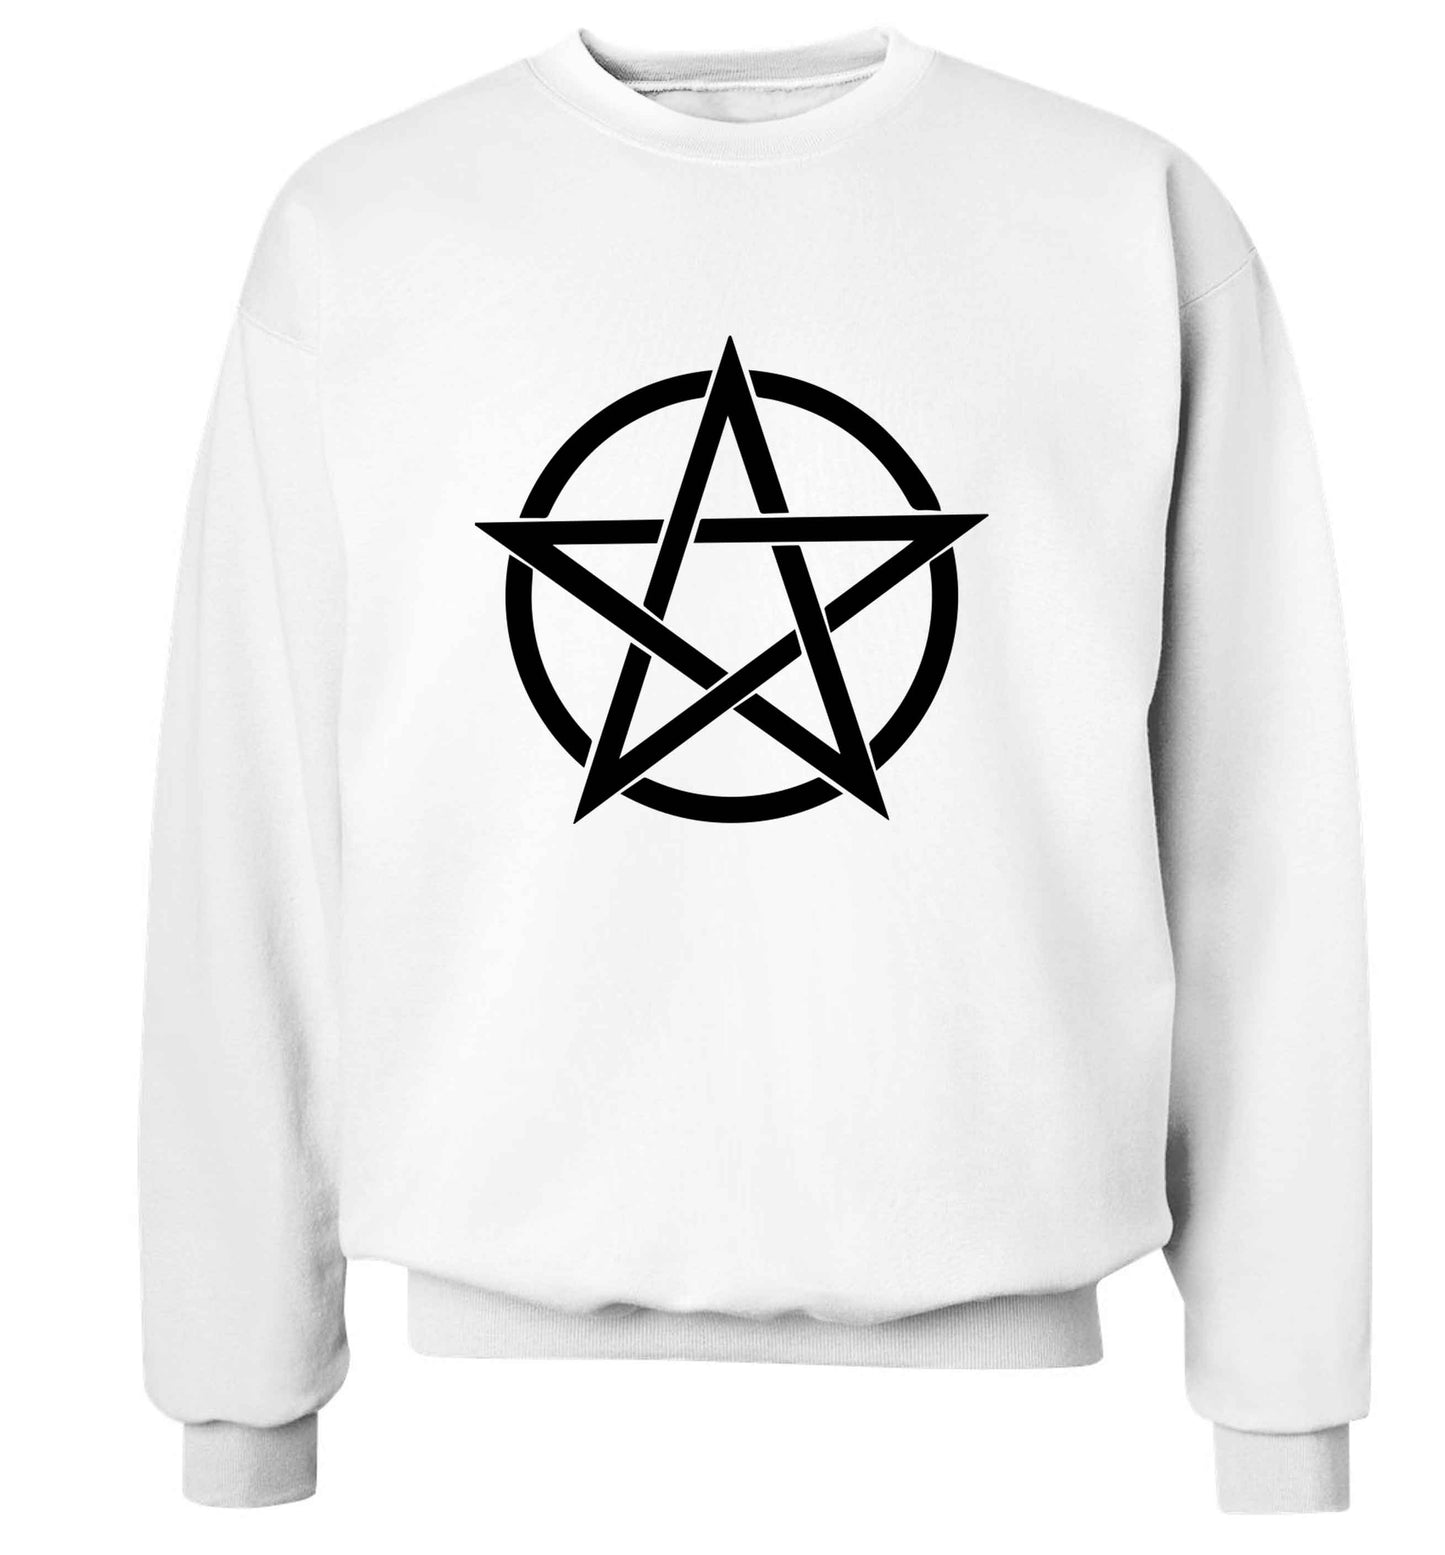 Pentagram symbol adult's unisex white sweater 2XL